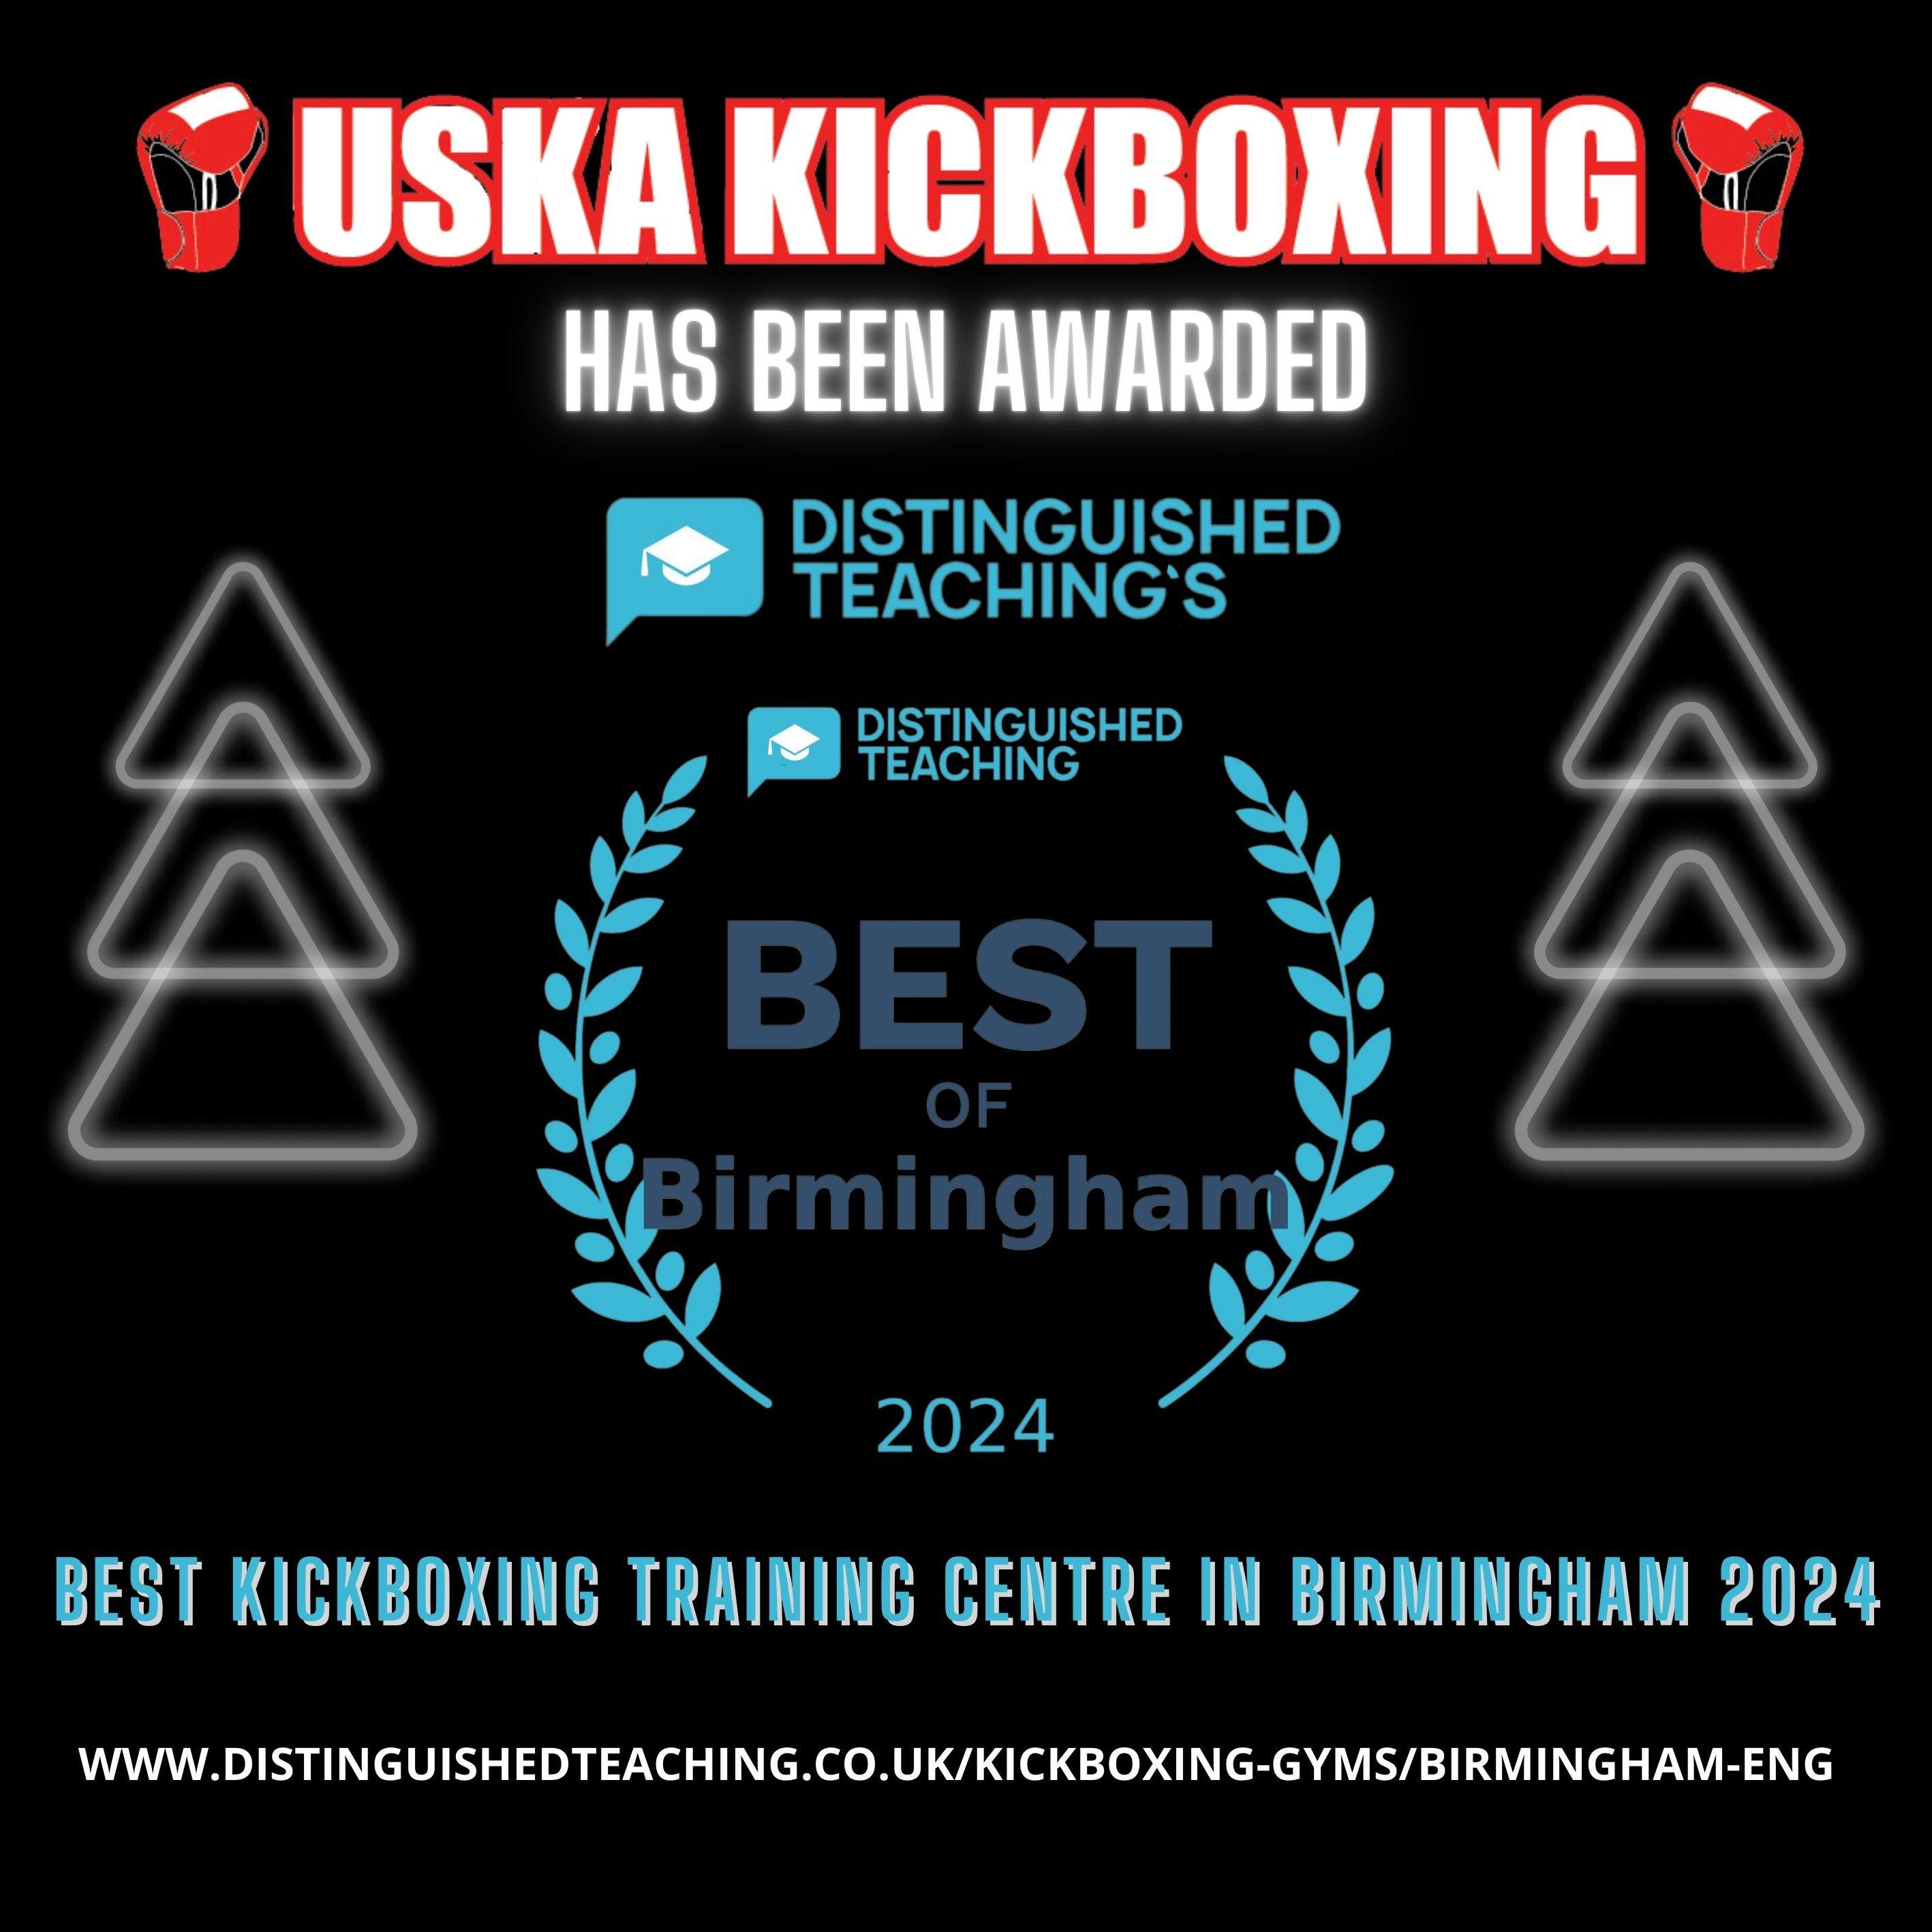 07-03-24 - USKA named Best Kickboxing Training Centre in Birmingham for 2024!